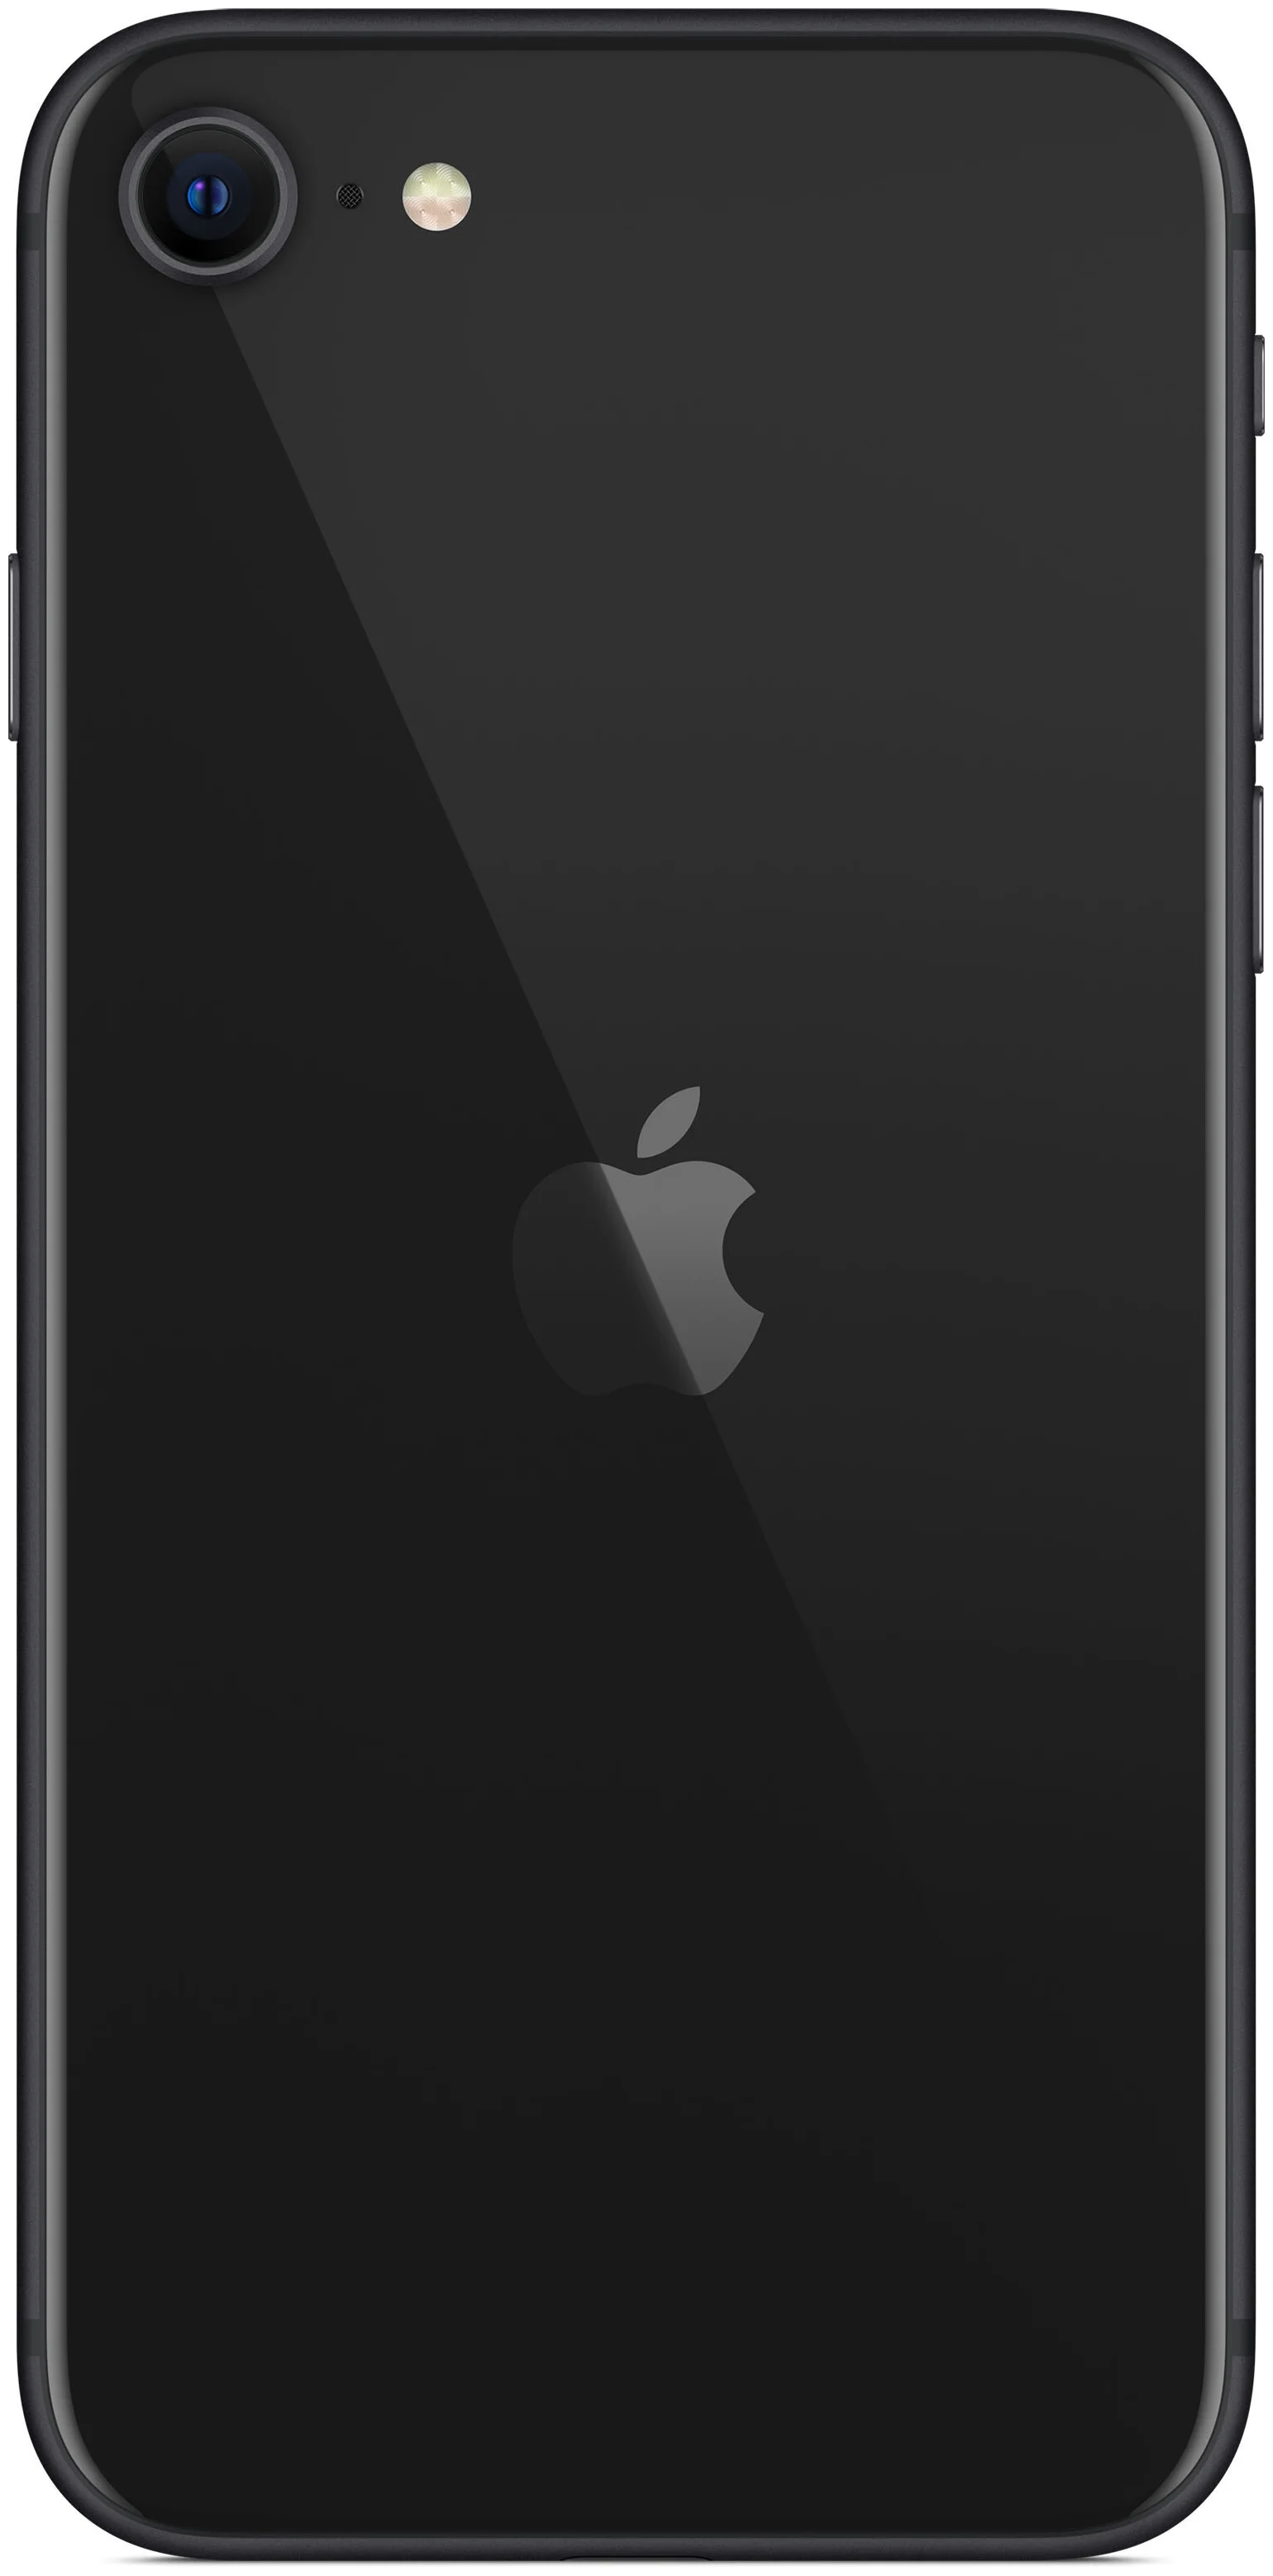 Apple iPhone SE 2020 64GB - операционная система: iOS 13